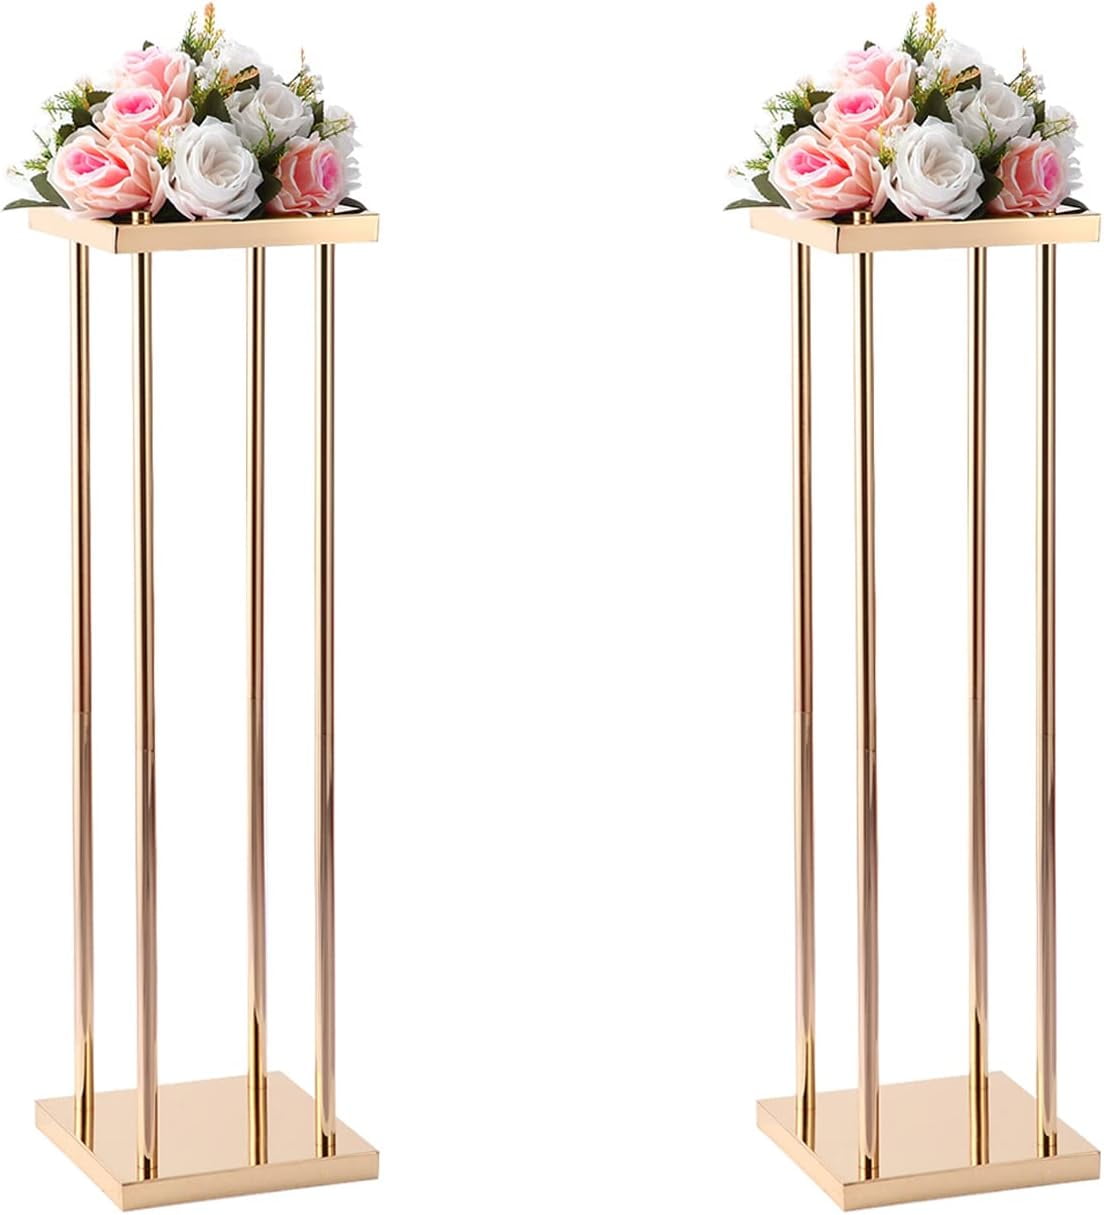 Youloveit 1-Pack Metal Vase Wedding Flower Stand Metal Wedding Geometric Flower Vase Column Stand Gold Flower Holder for Wedding Party Home Decor